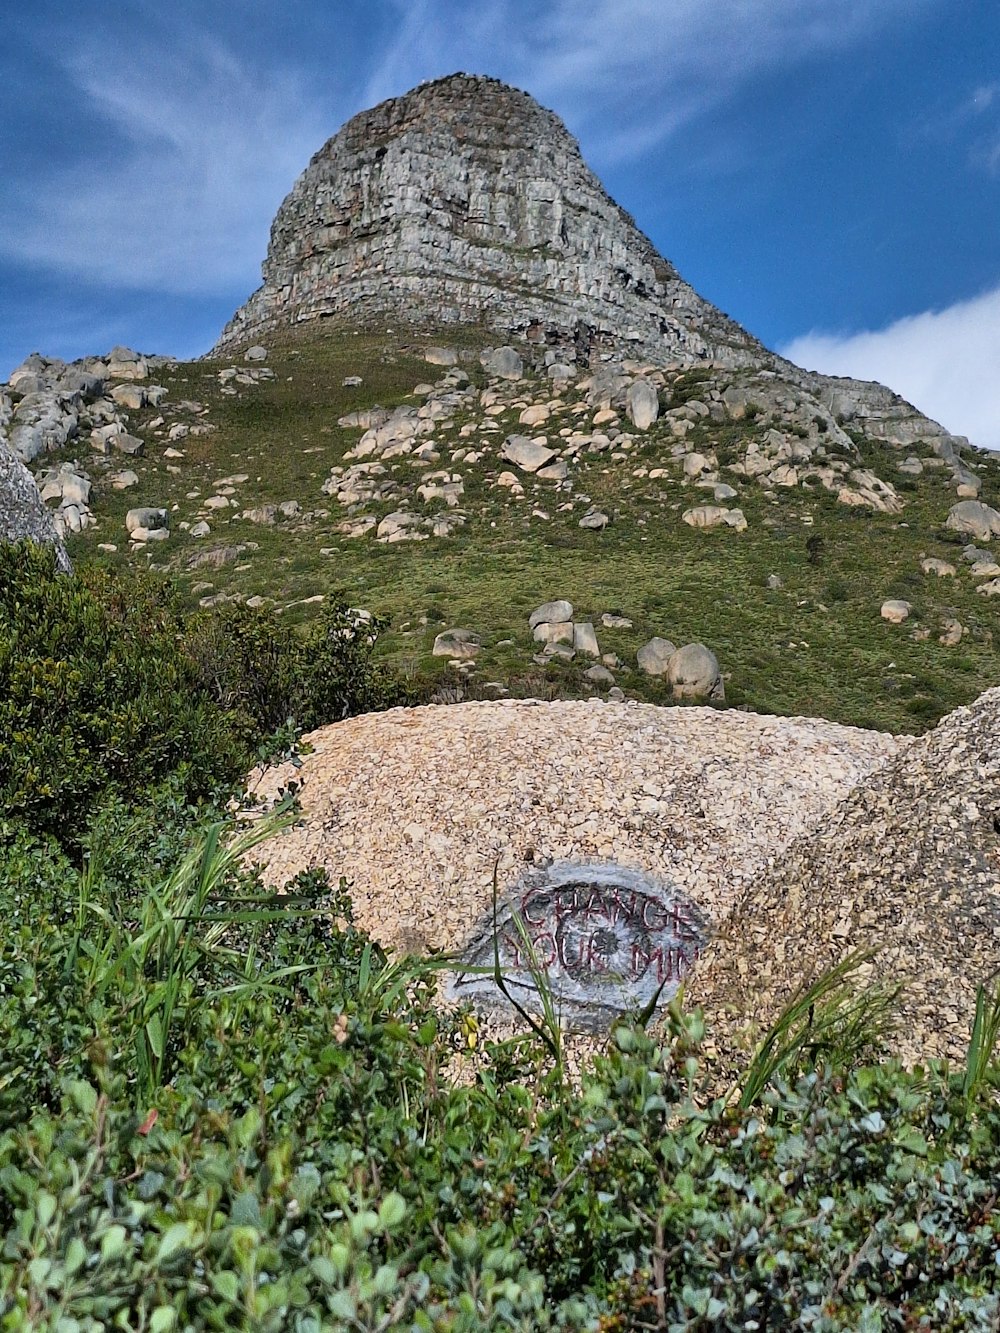 a rock with a graffiti on it near a mountain